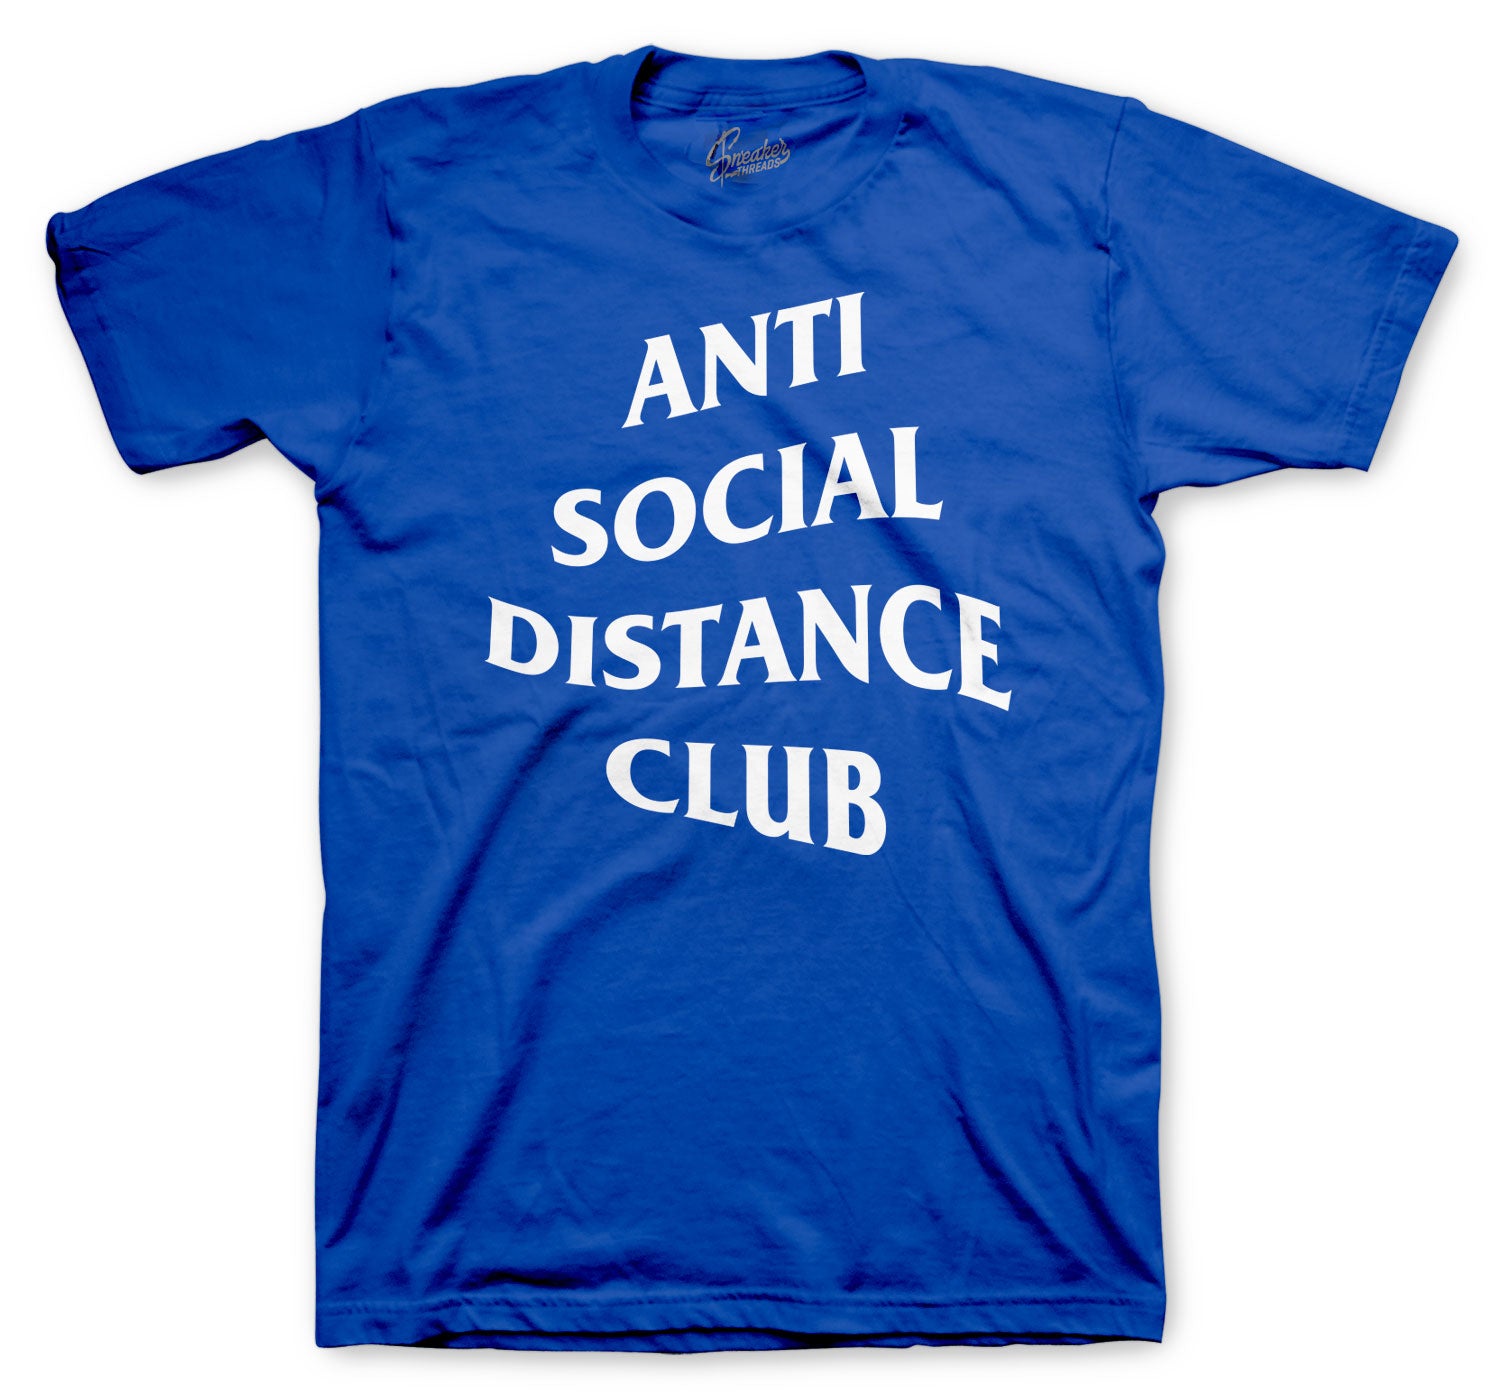 Retro 5 Stealth Shirt - Social Distance - Blue